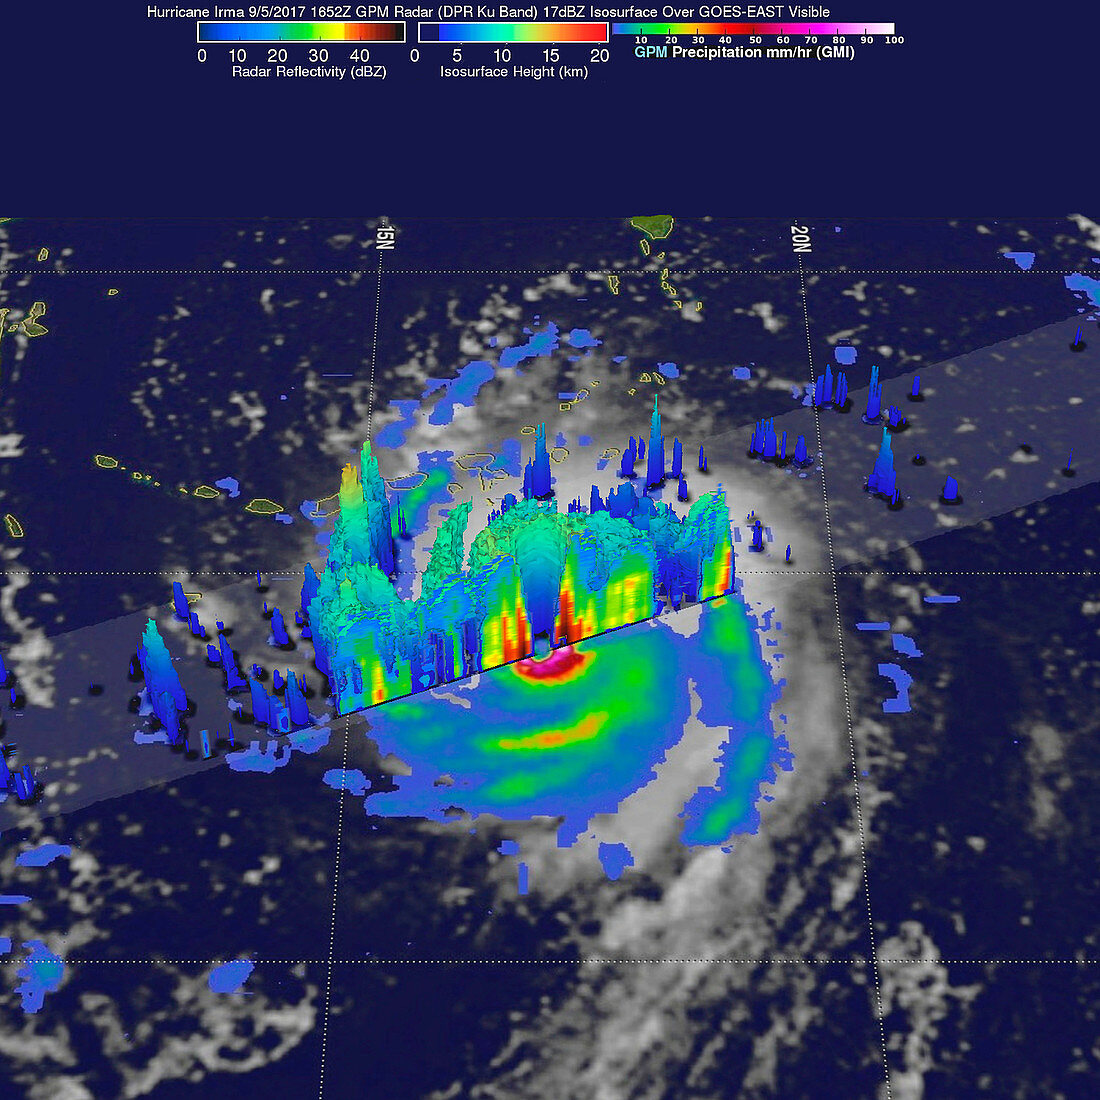 Hurricane Irma rainfall, 3D satellite image